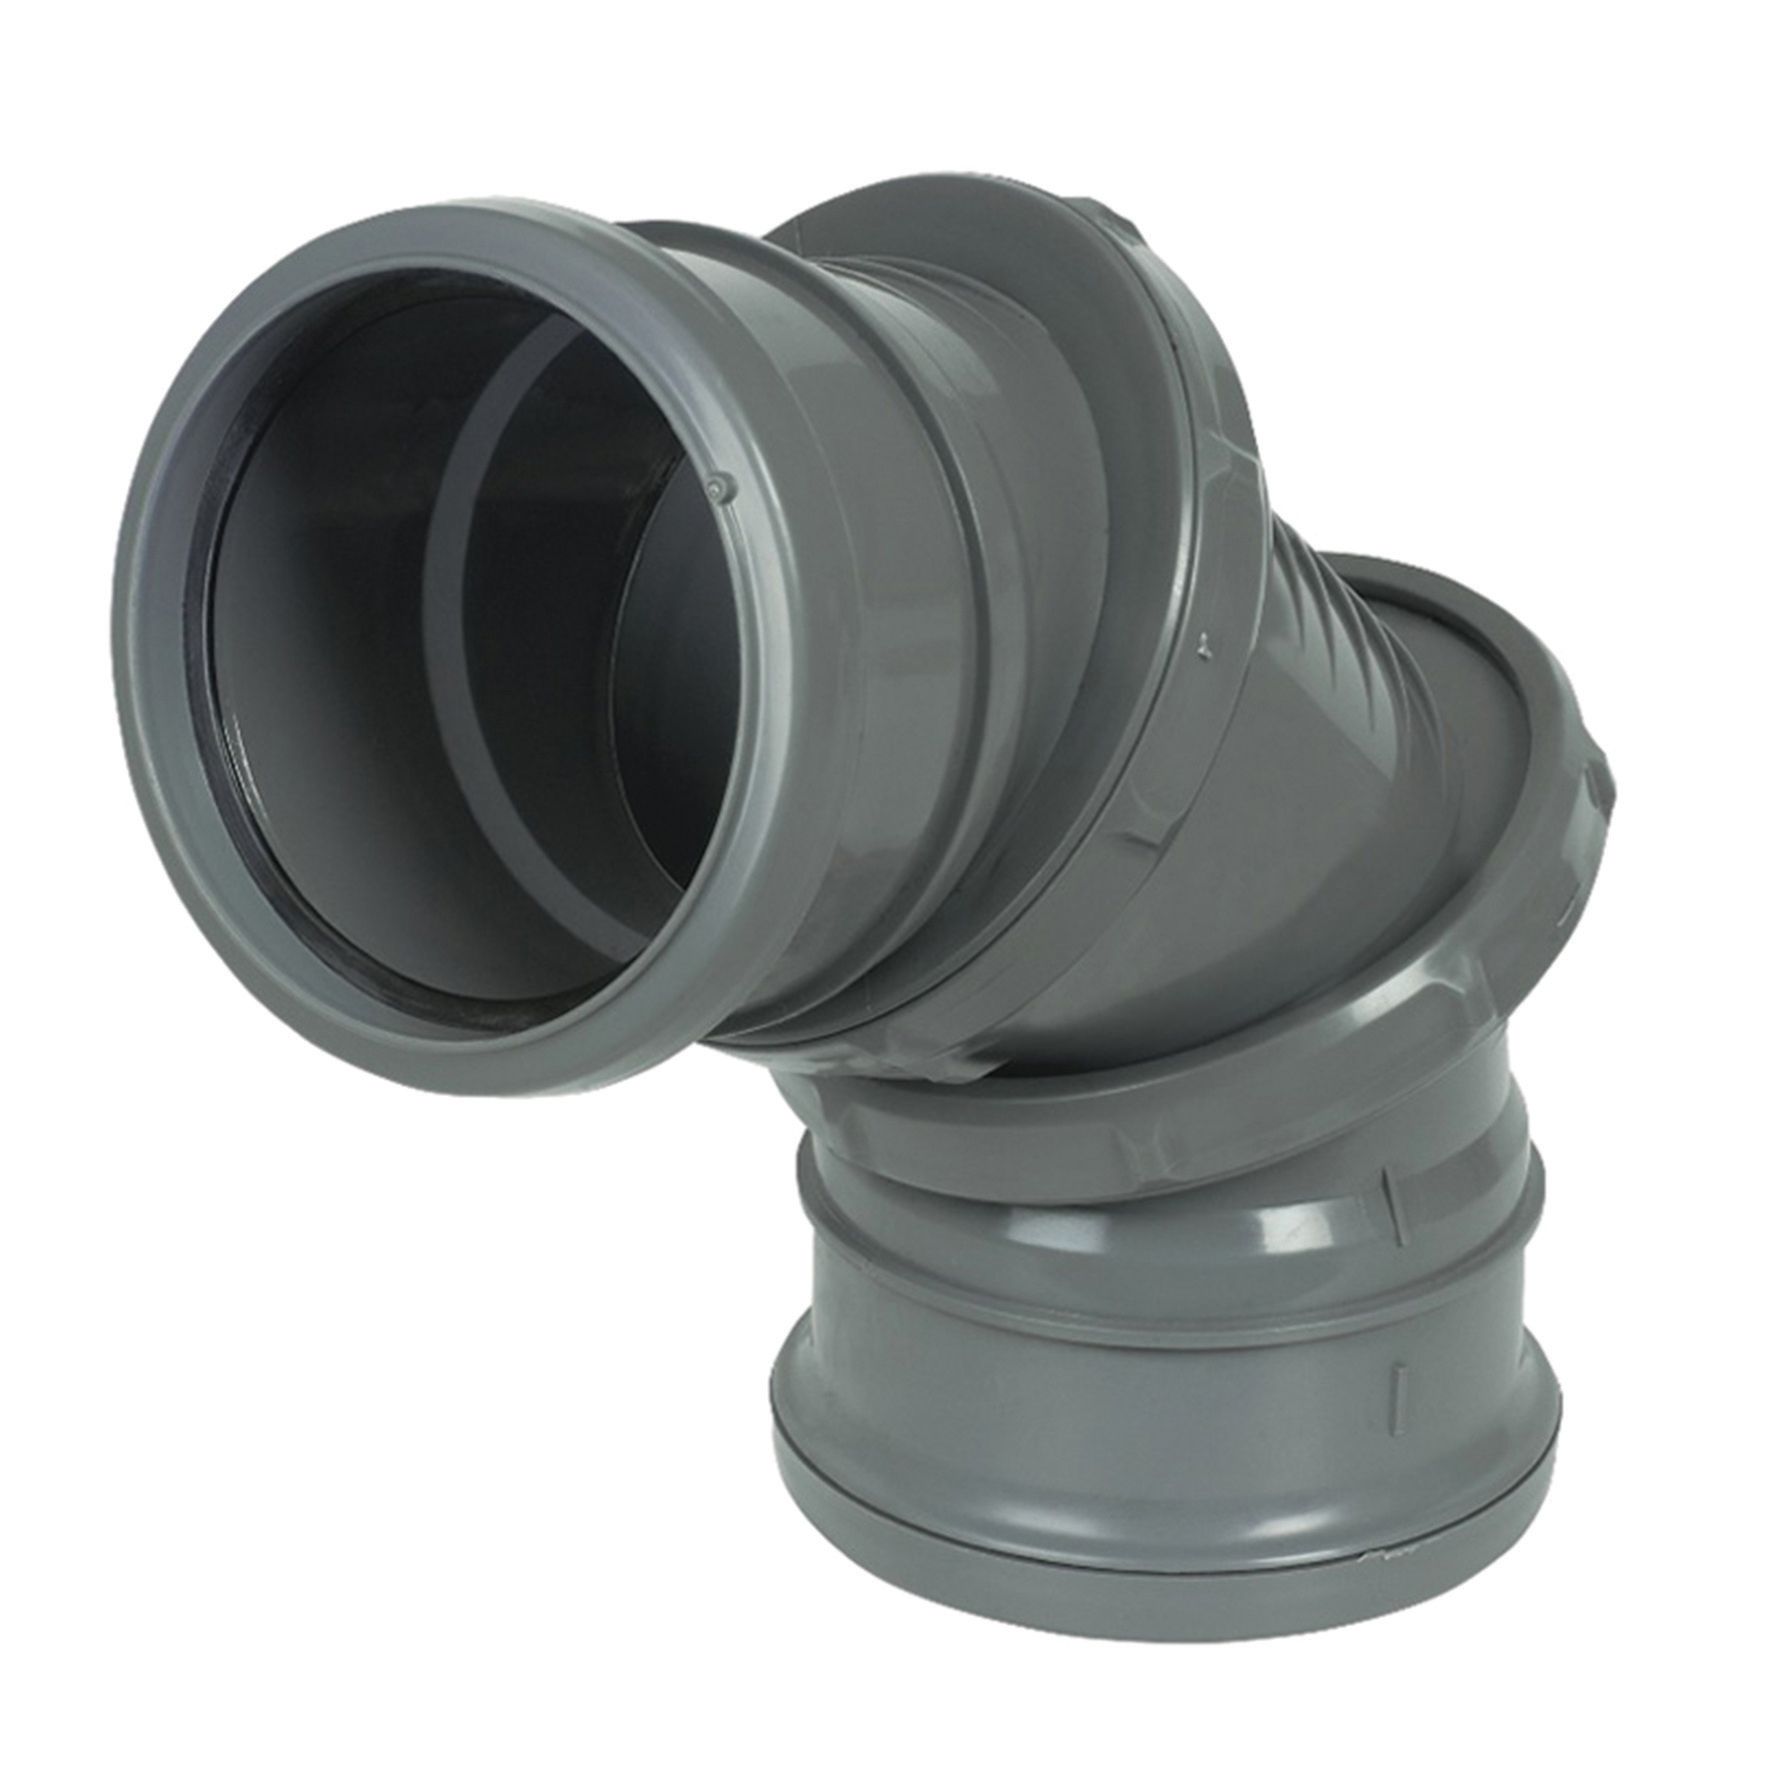 Image of FloPlast 110mm Soil Pipe Adjustable Bend Double Socket 0° to 90° - Grey